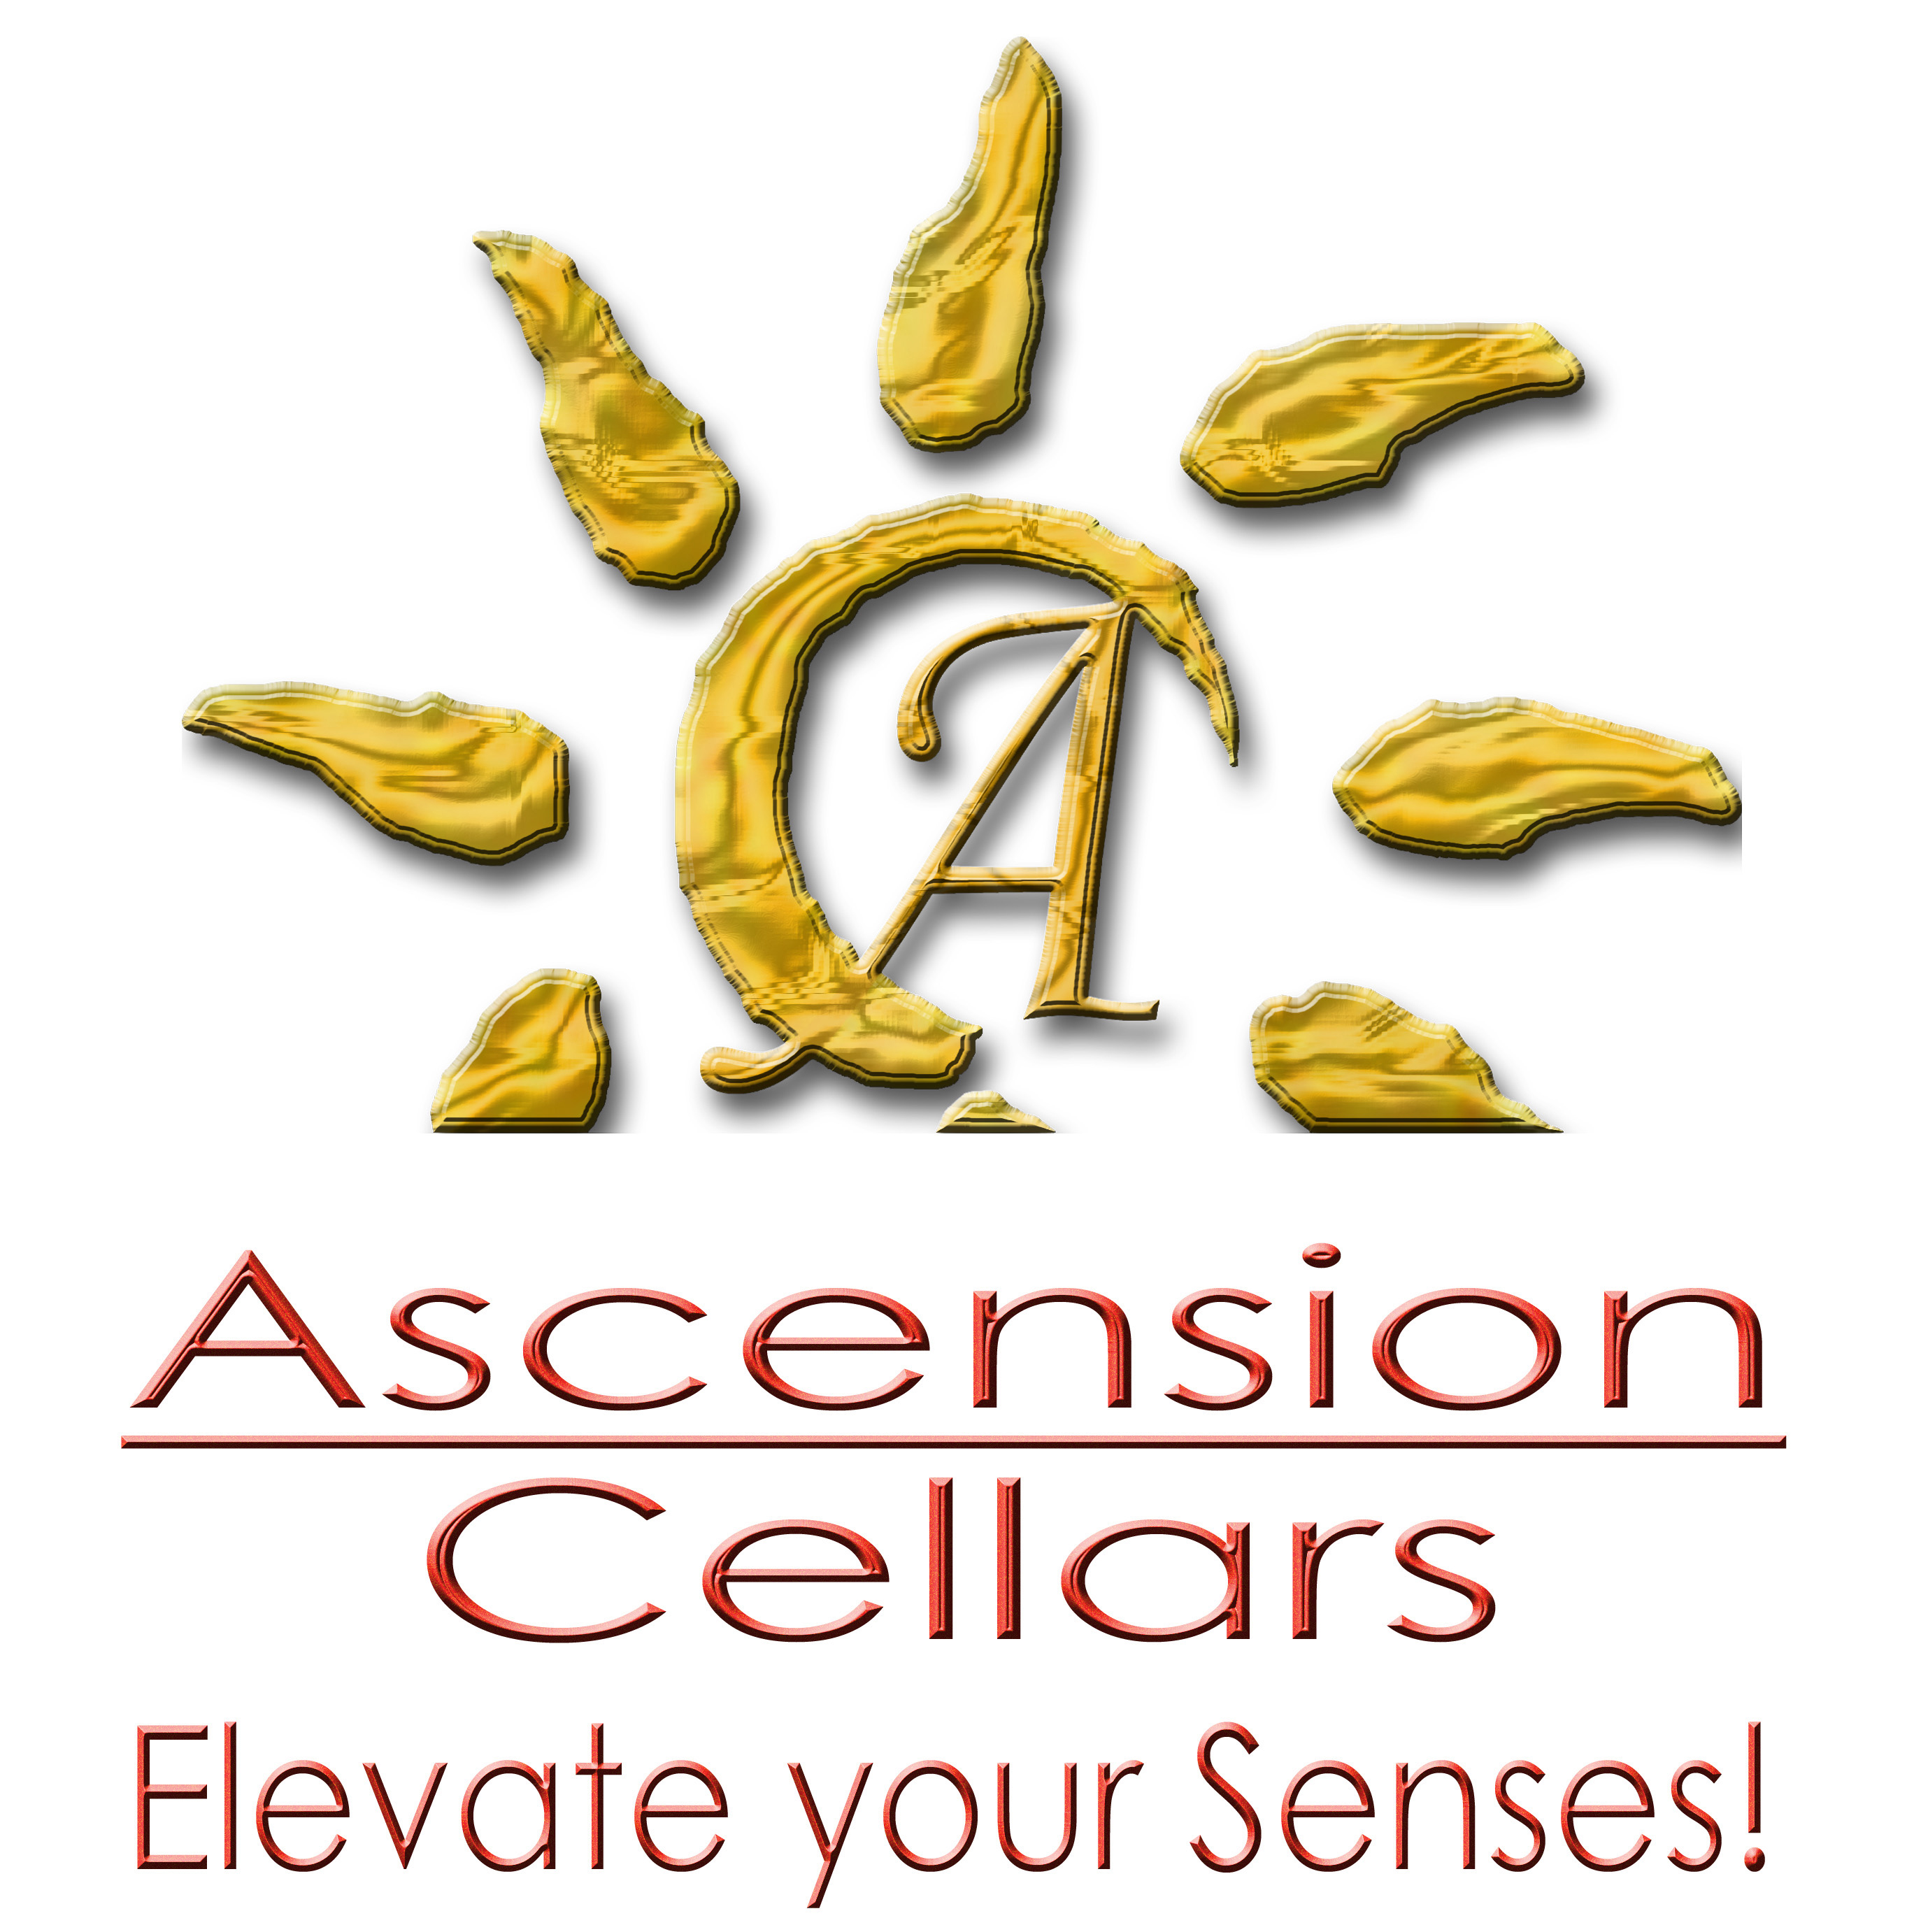 ascension health alliance